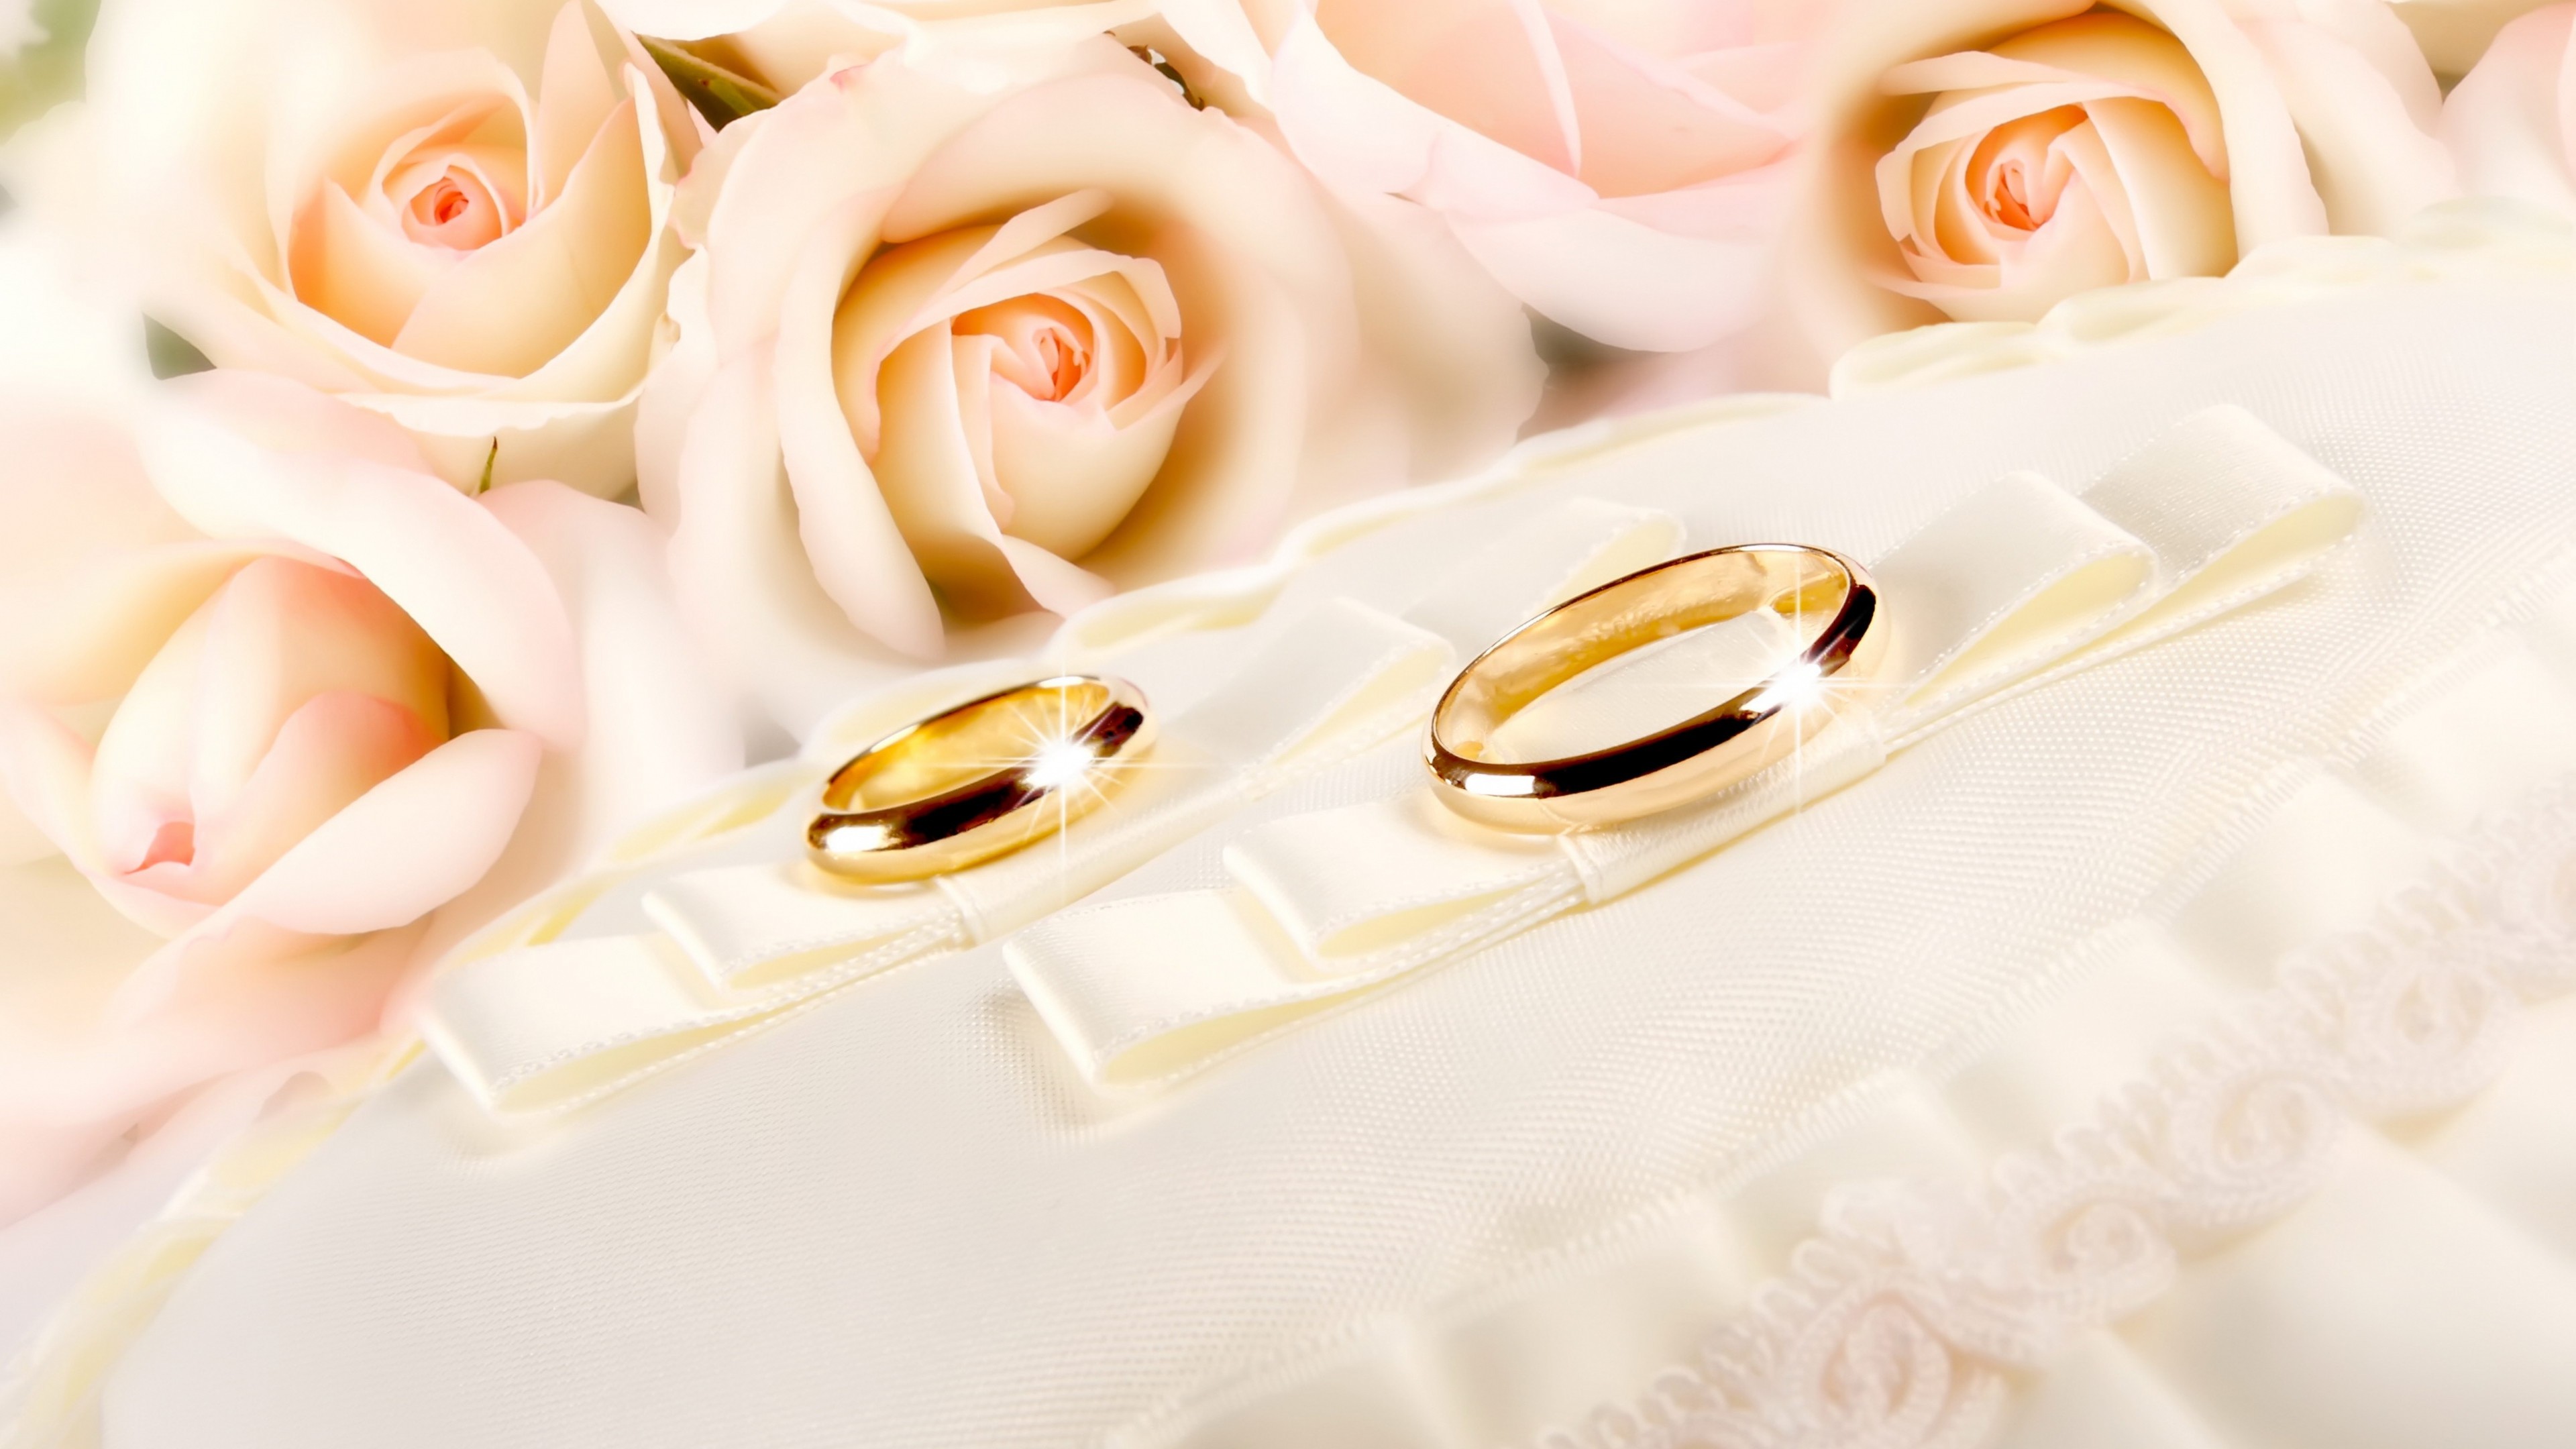 Rings wedding gold glitter fabric flower rose backgrounds